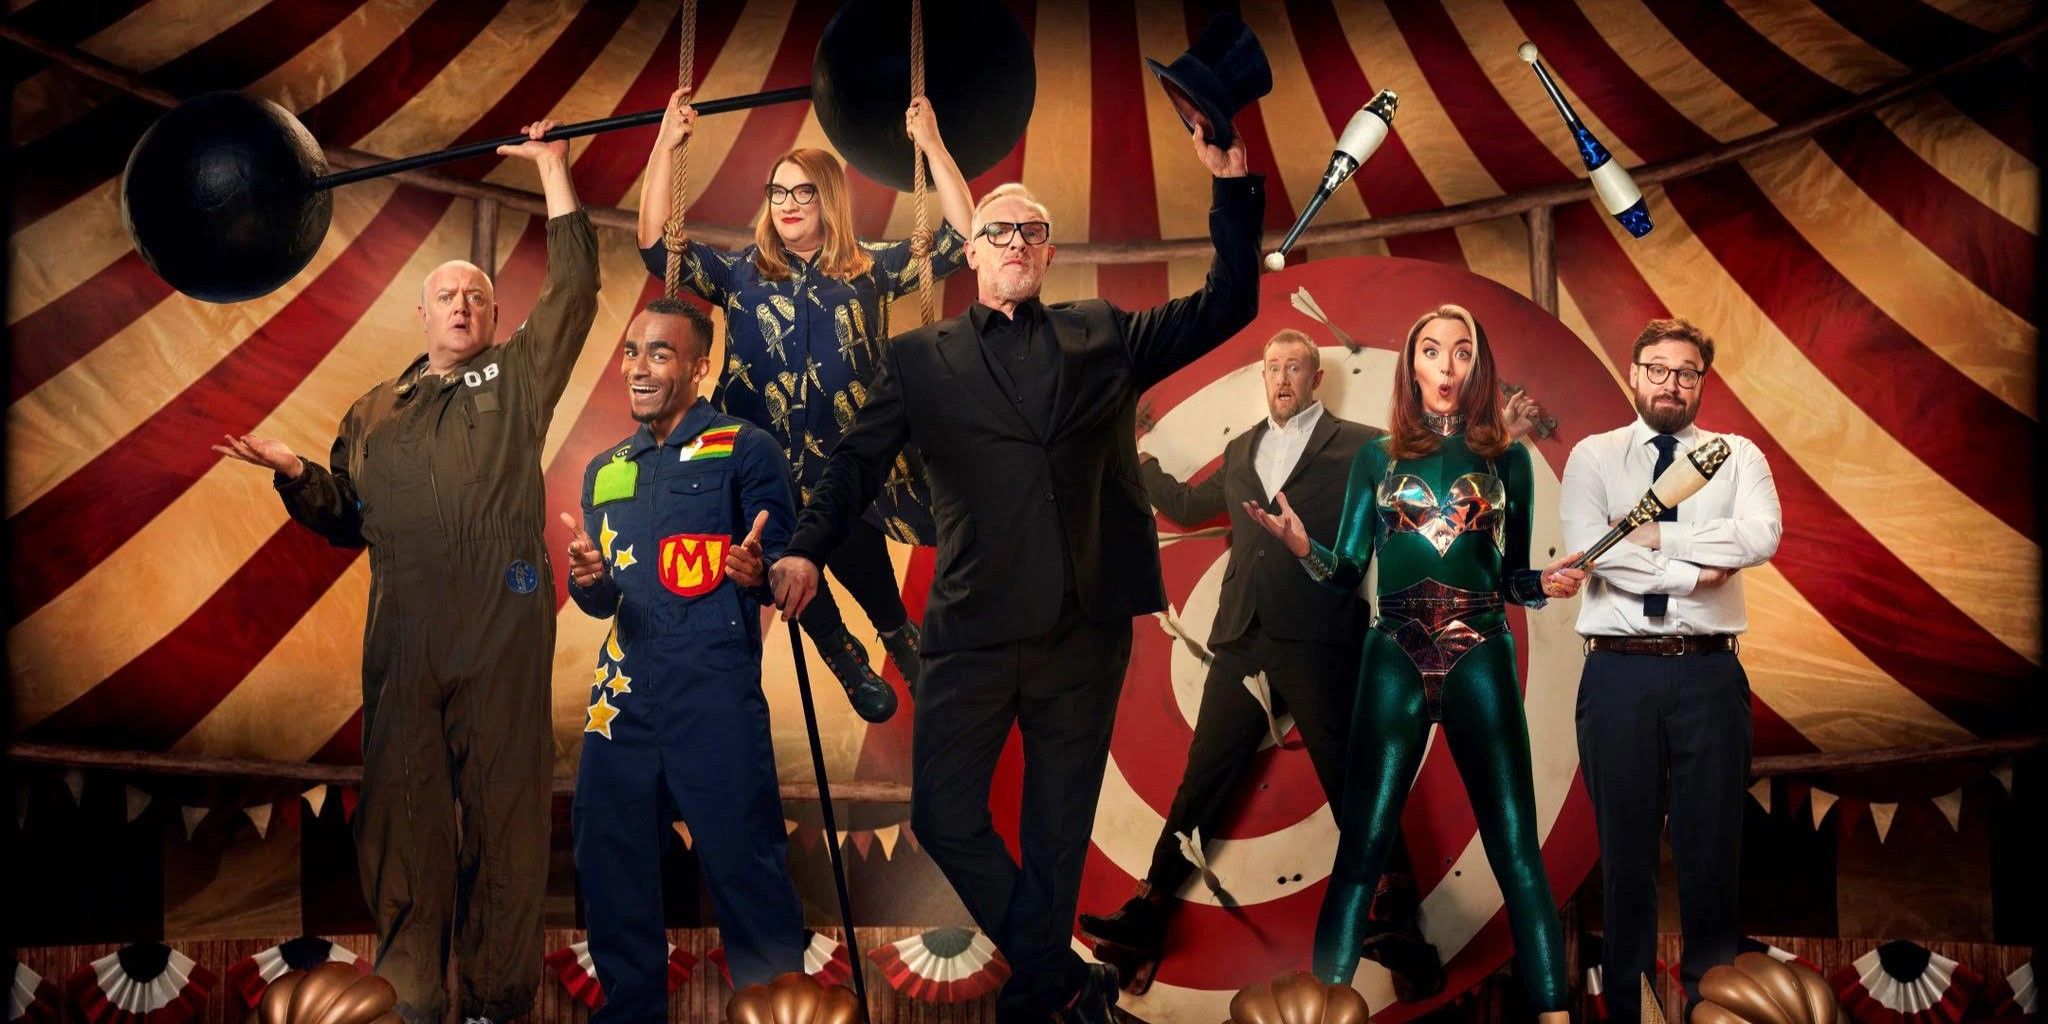 Circus-themed promo image of the Taskmaster season 14 cast.